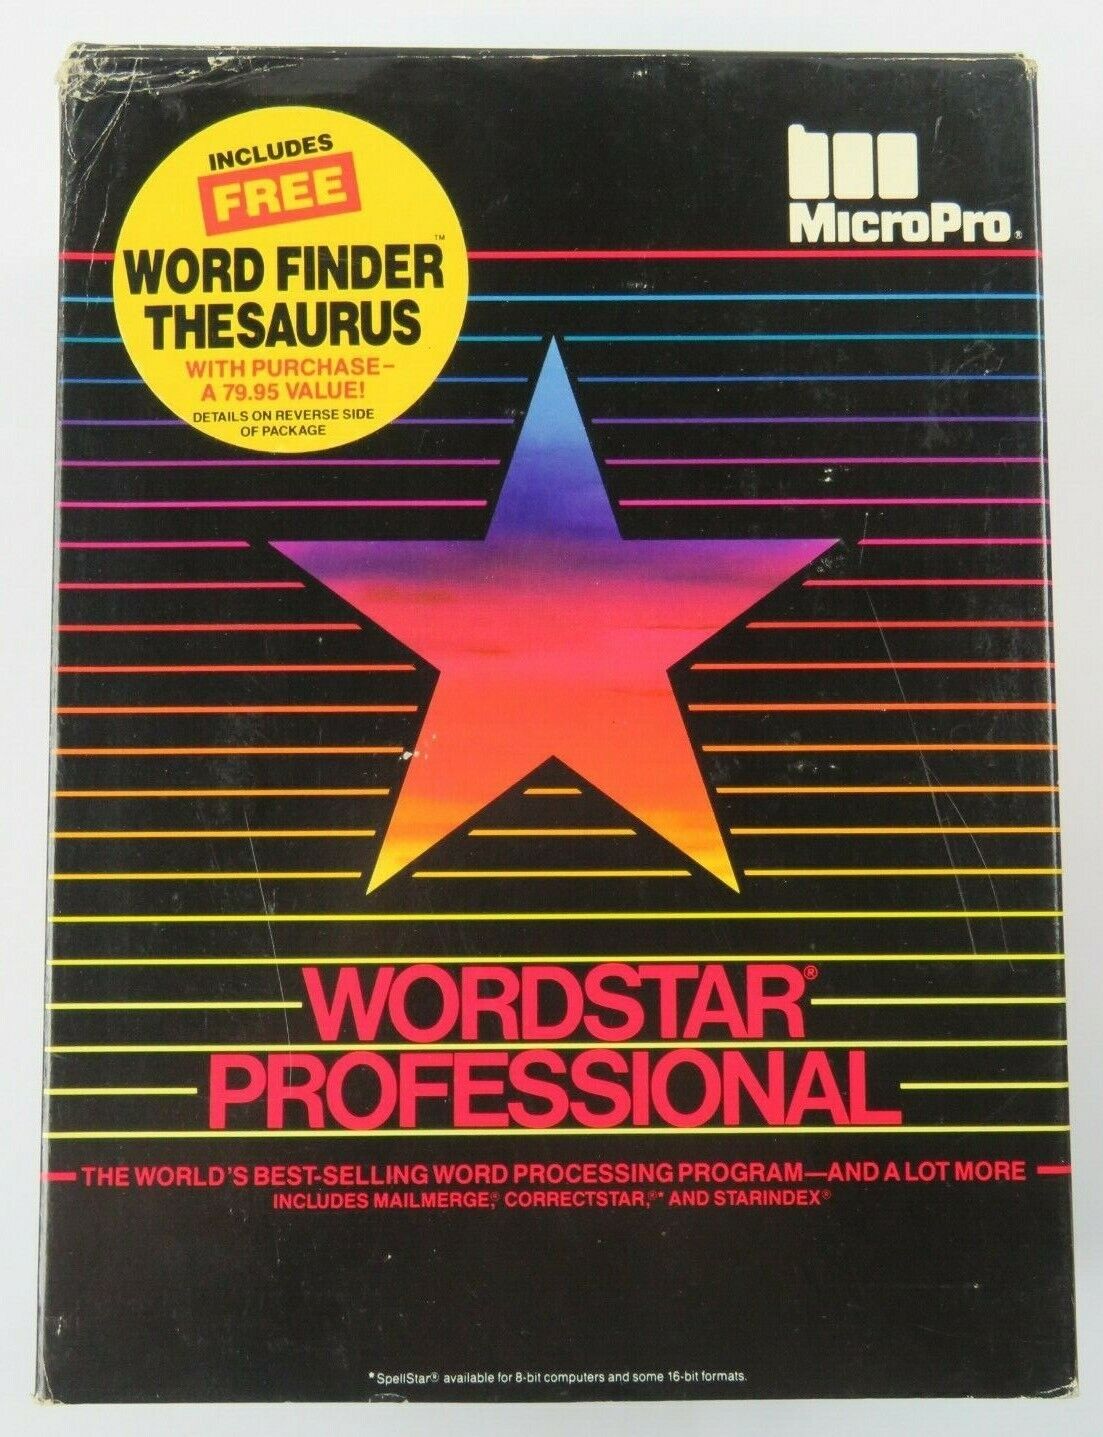 MicroPro Wordstar Professional 3.3 IBM PC/DOS on 5.25